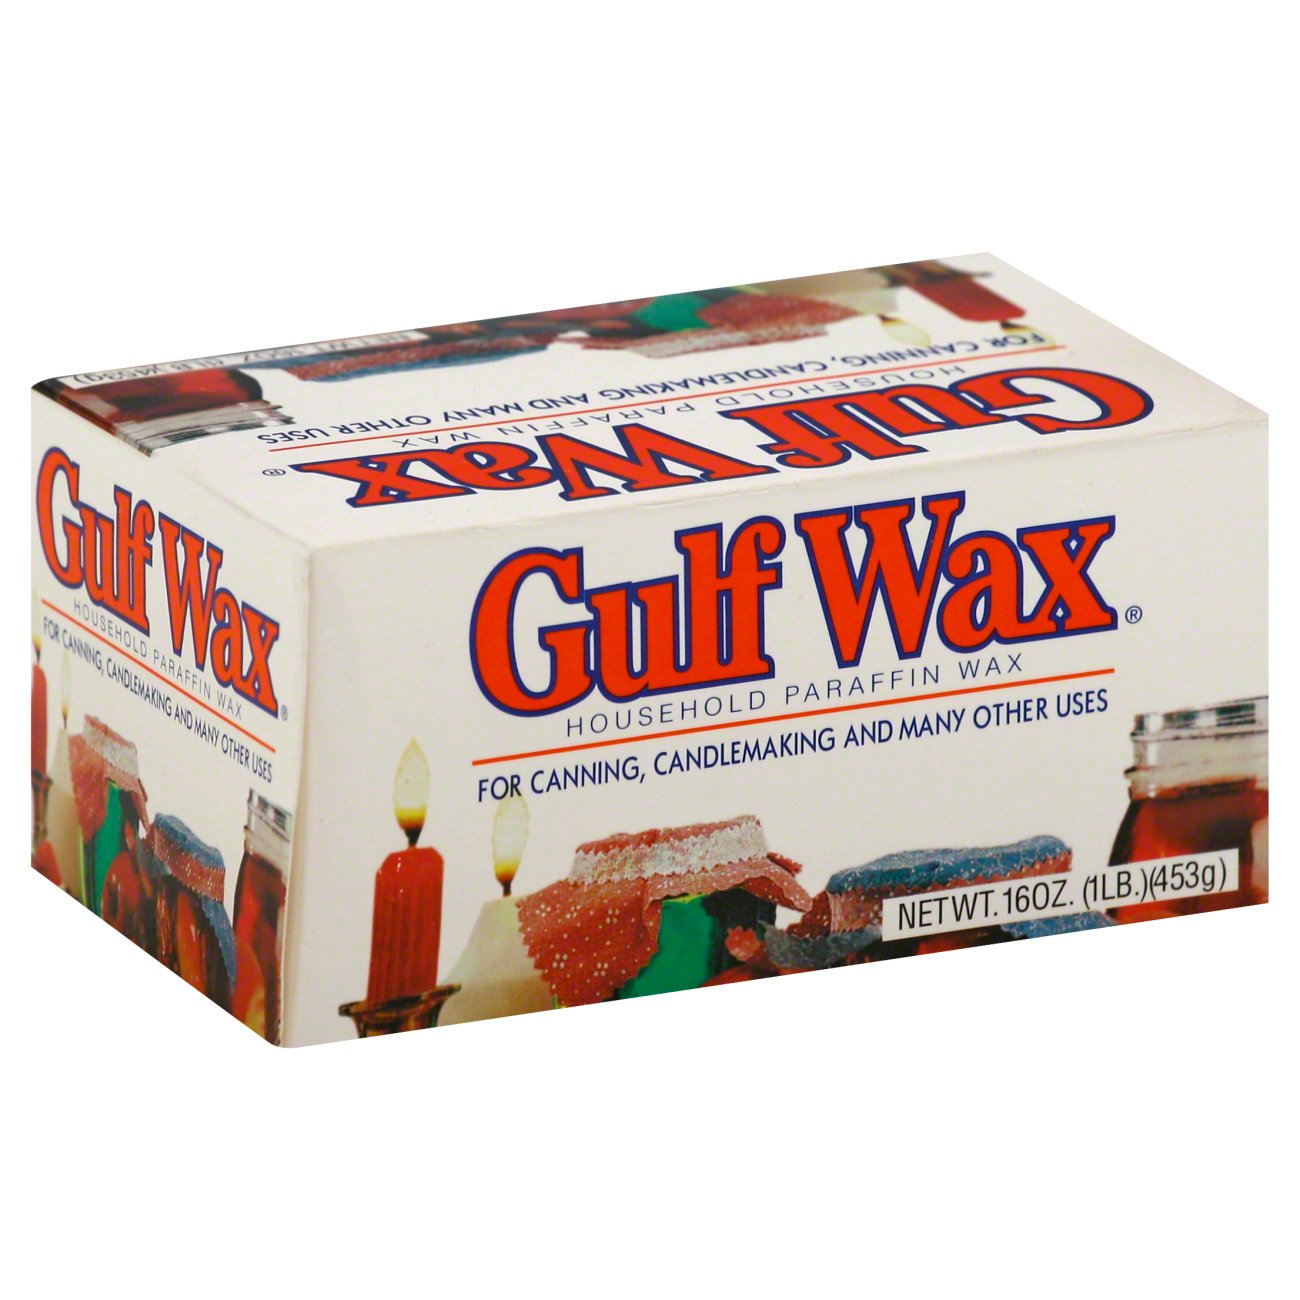  Royal Oak 203-060-005 Gulfwax Household Paraffin Wax